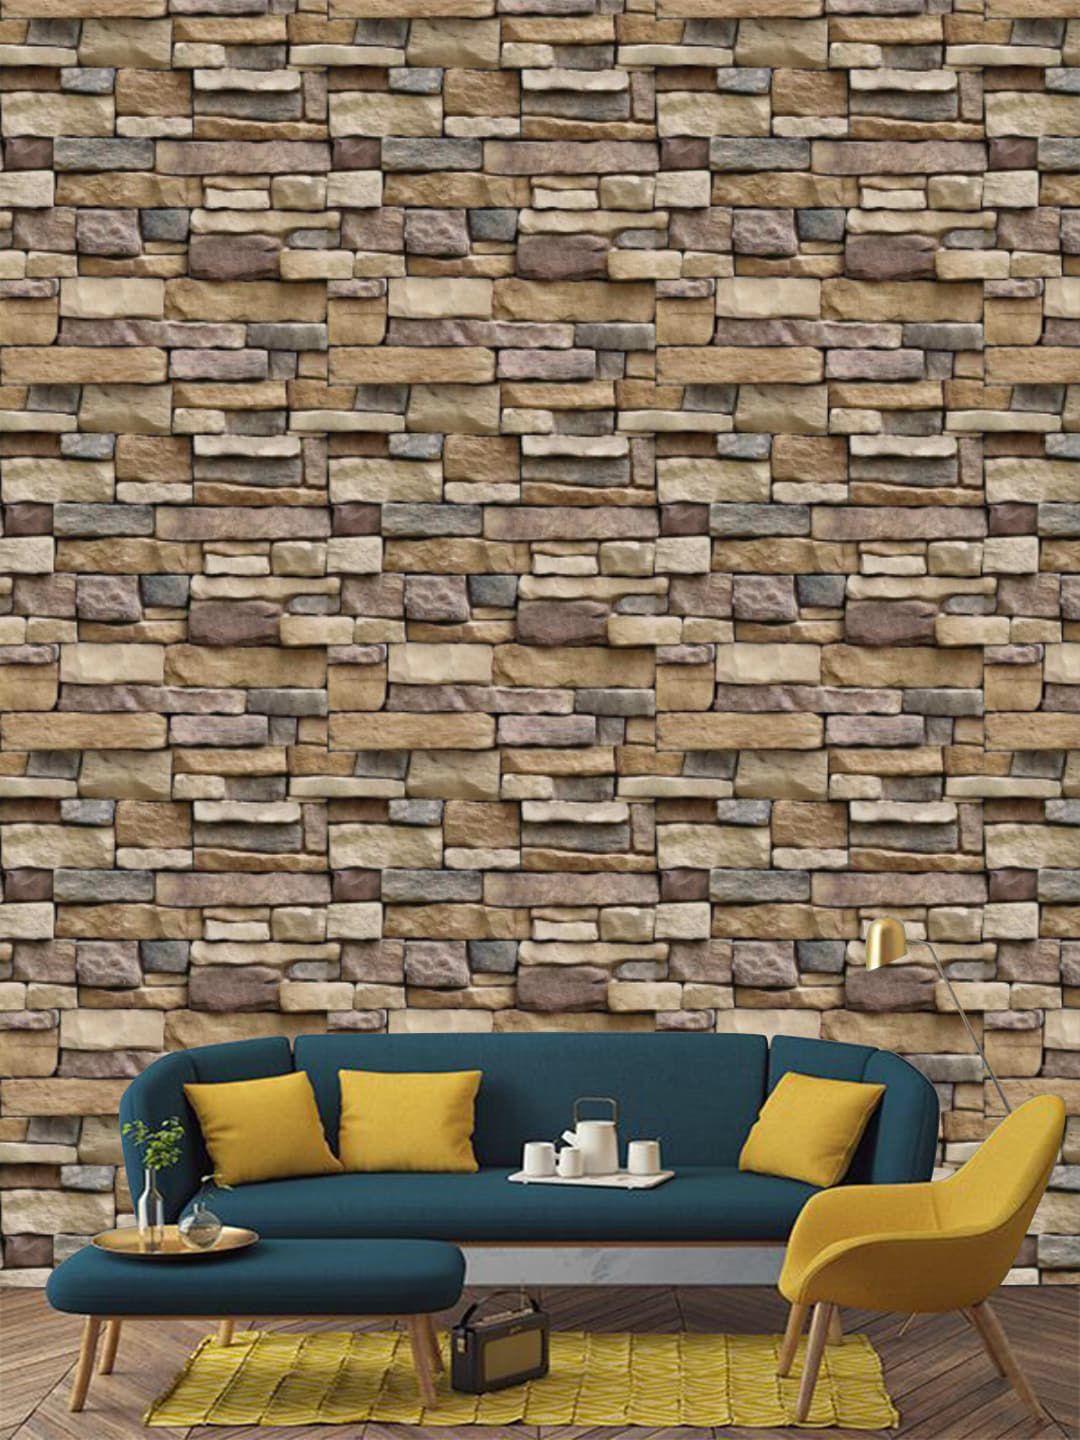 Jaamso Royals Multicoloured Brick Stone Wall Dcor Self Adhesive Wallpaper Price in India